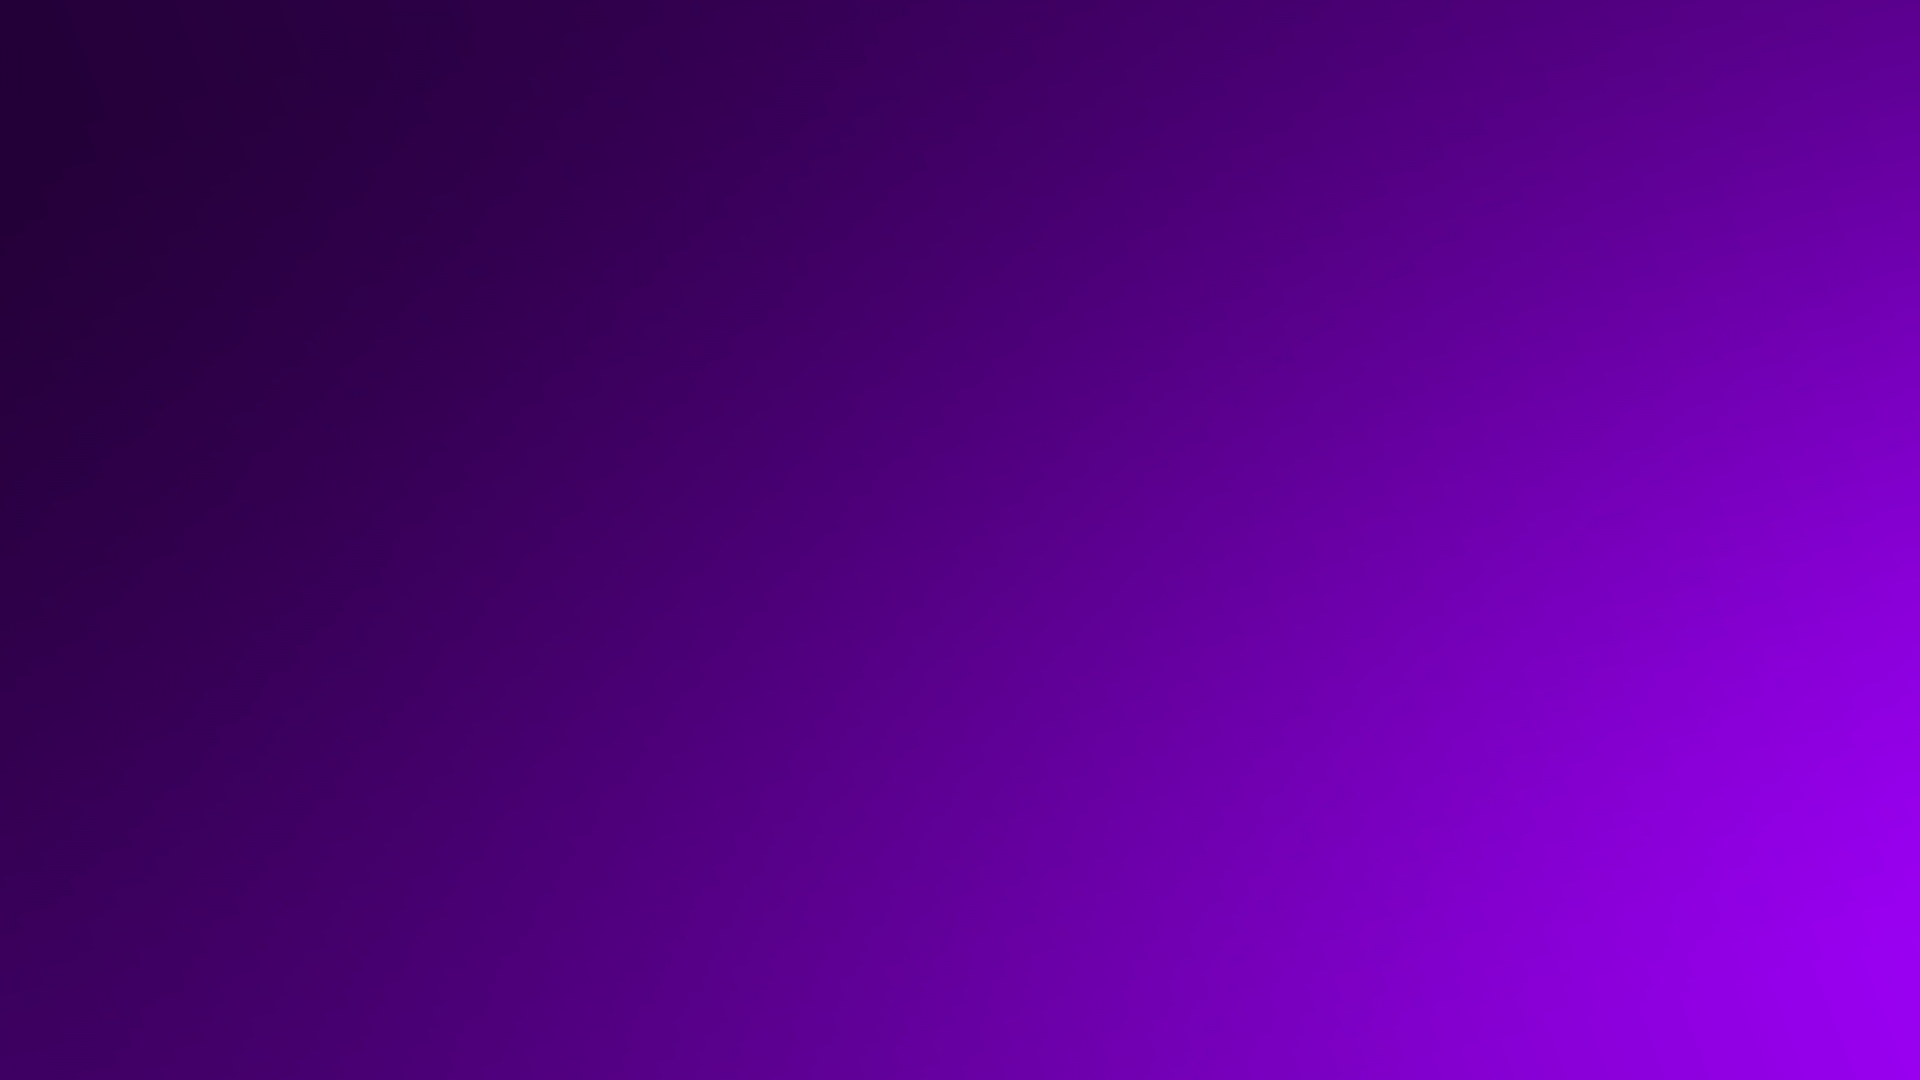 HD Background Violet Color Solid Bright Gradient Wallpaper